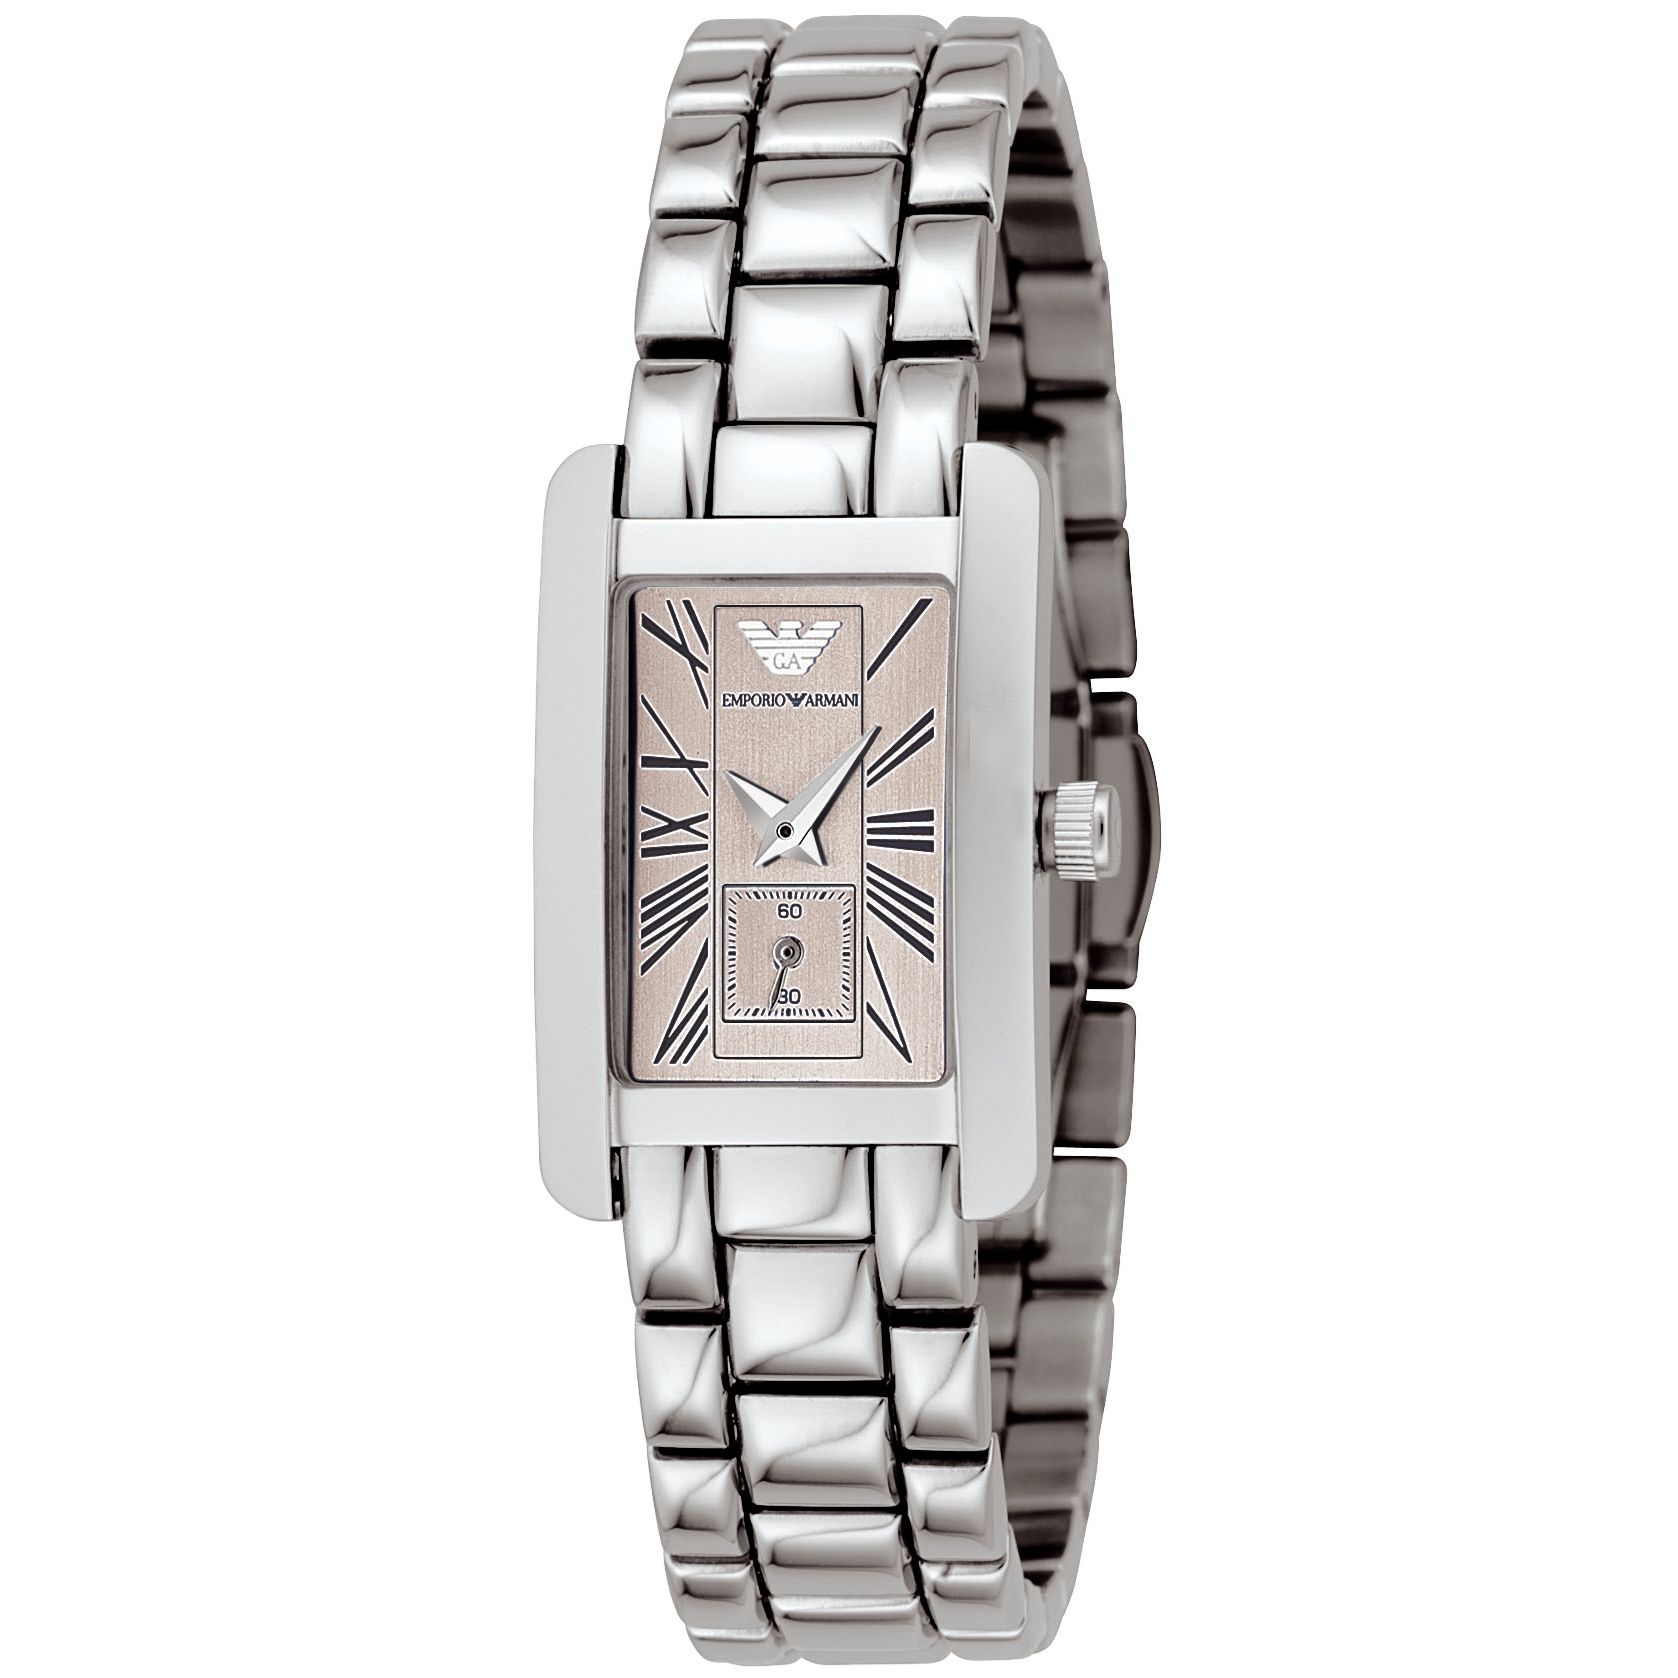 Emporio Armani AR0172 Women's Pink Champagne Dial Bracelet Watch at John Lewis